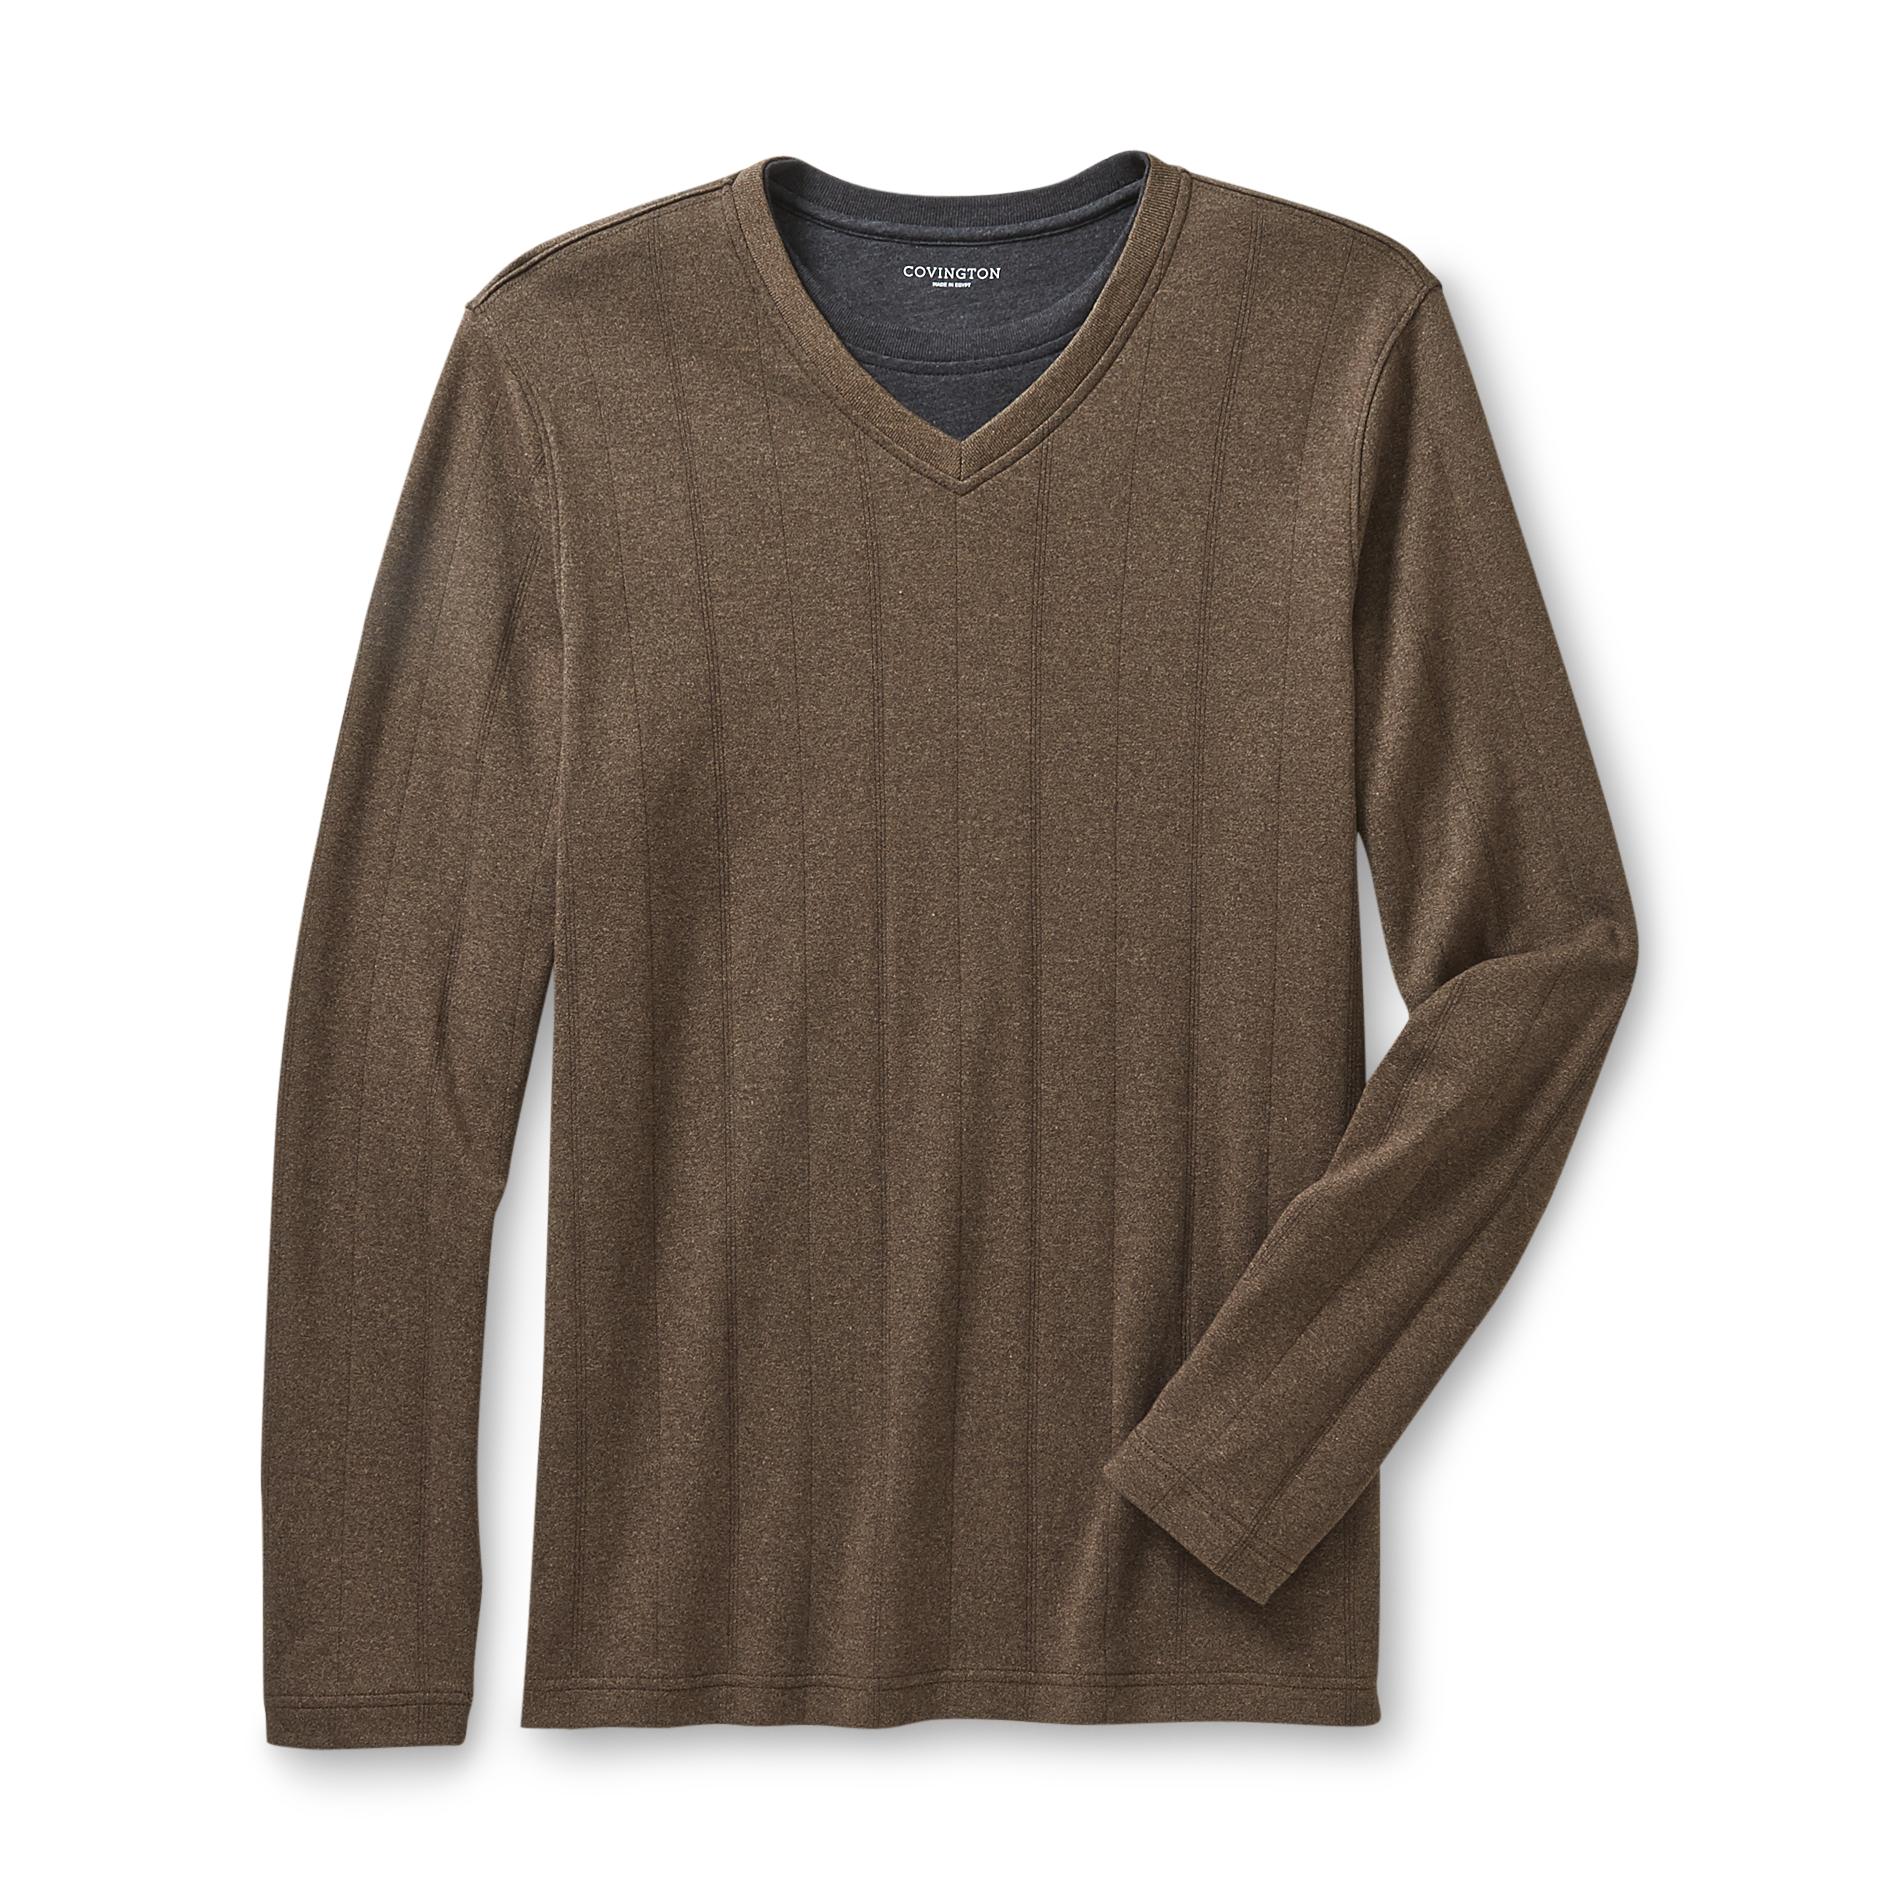 Covington Men's Layered-Look Sweater